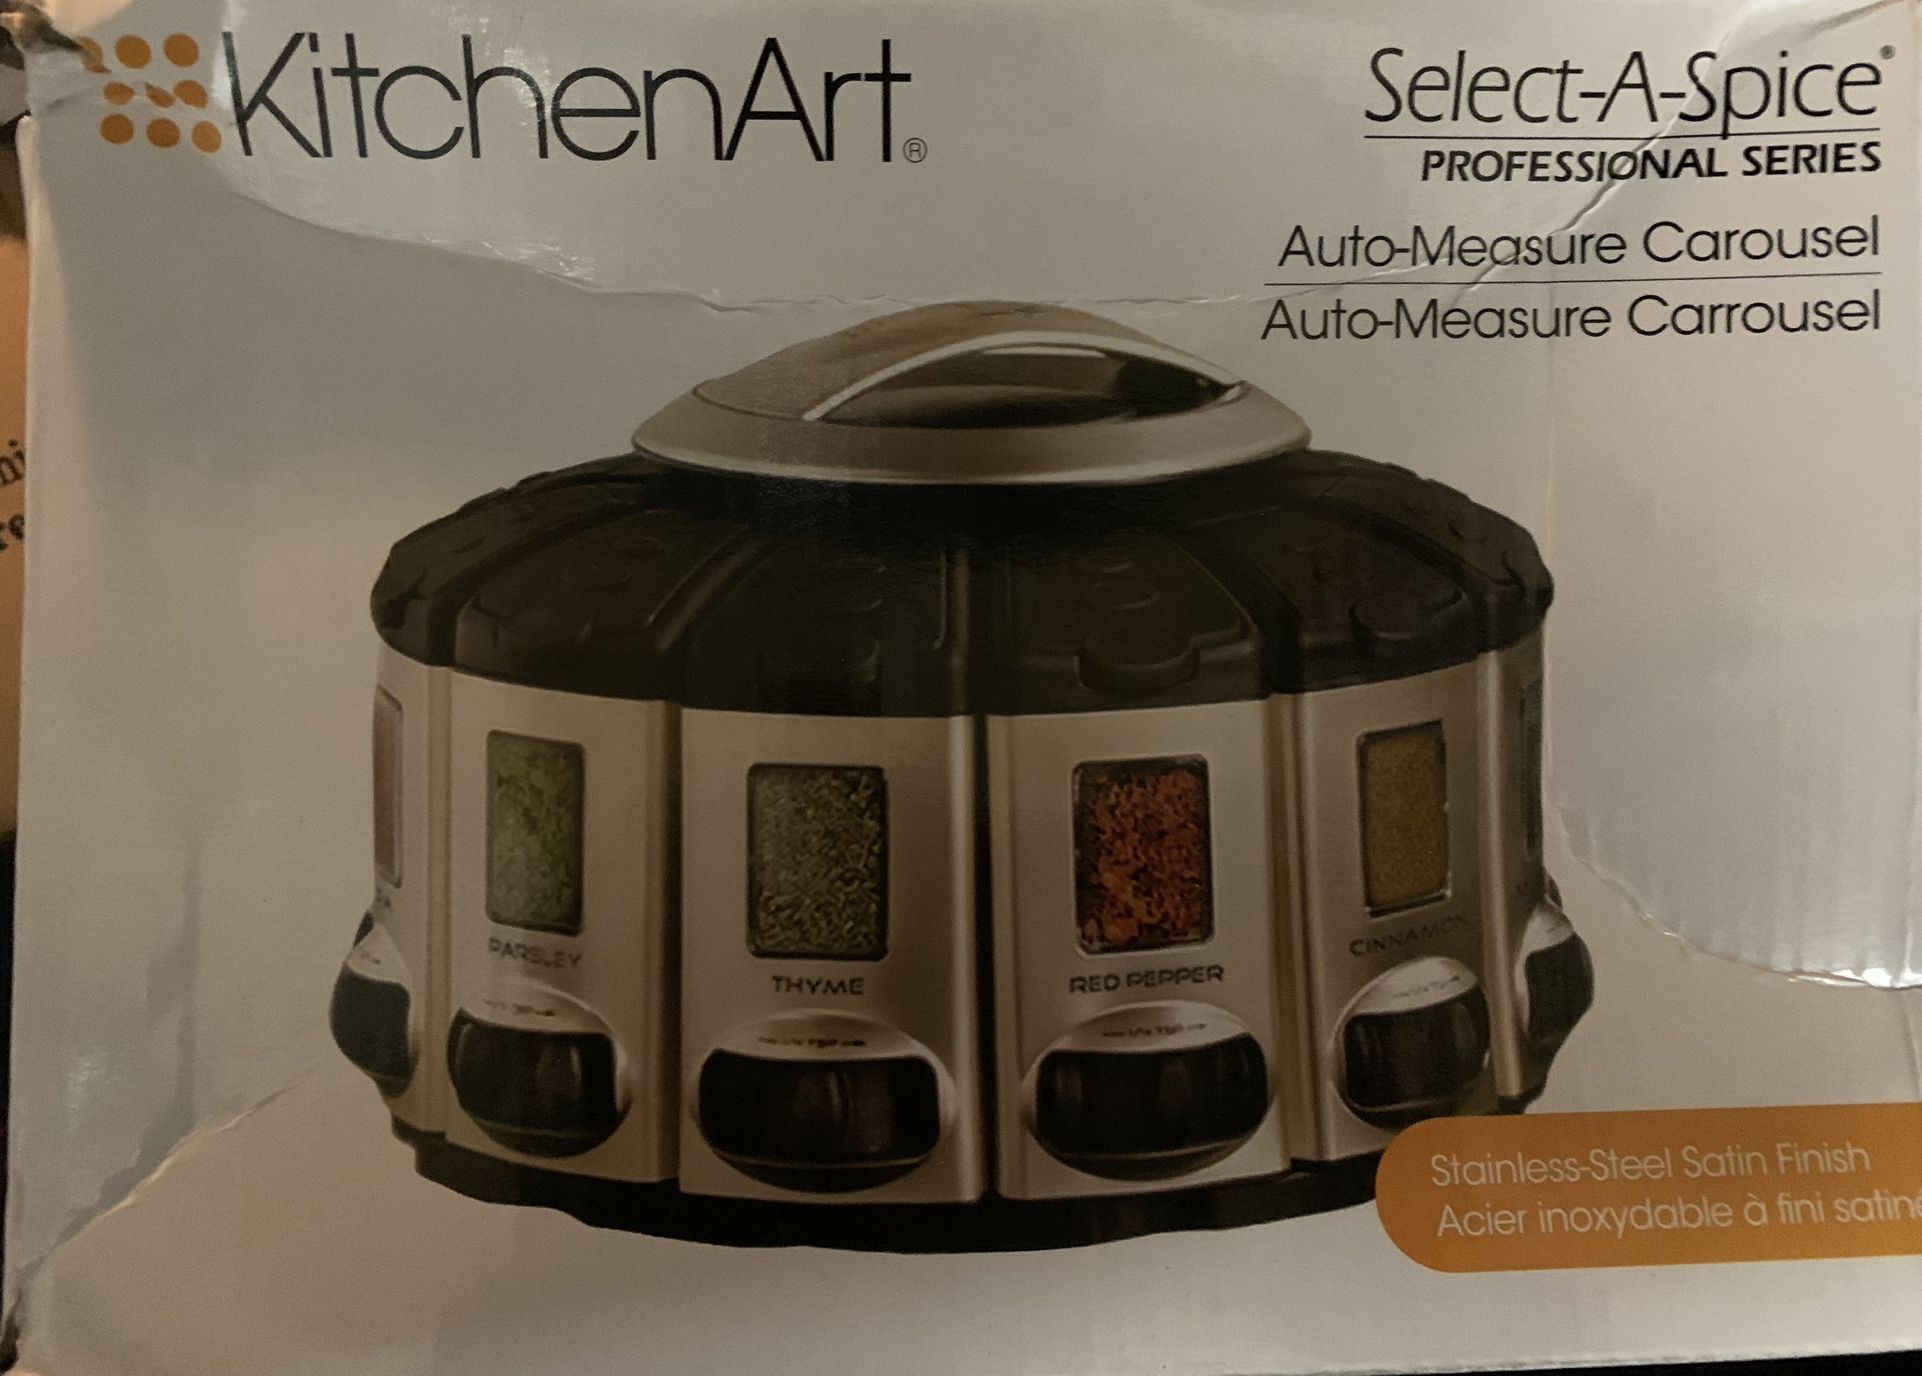 Kitchen Art Select-A-Spice